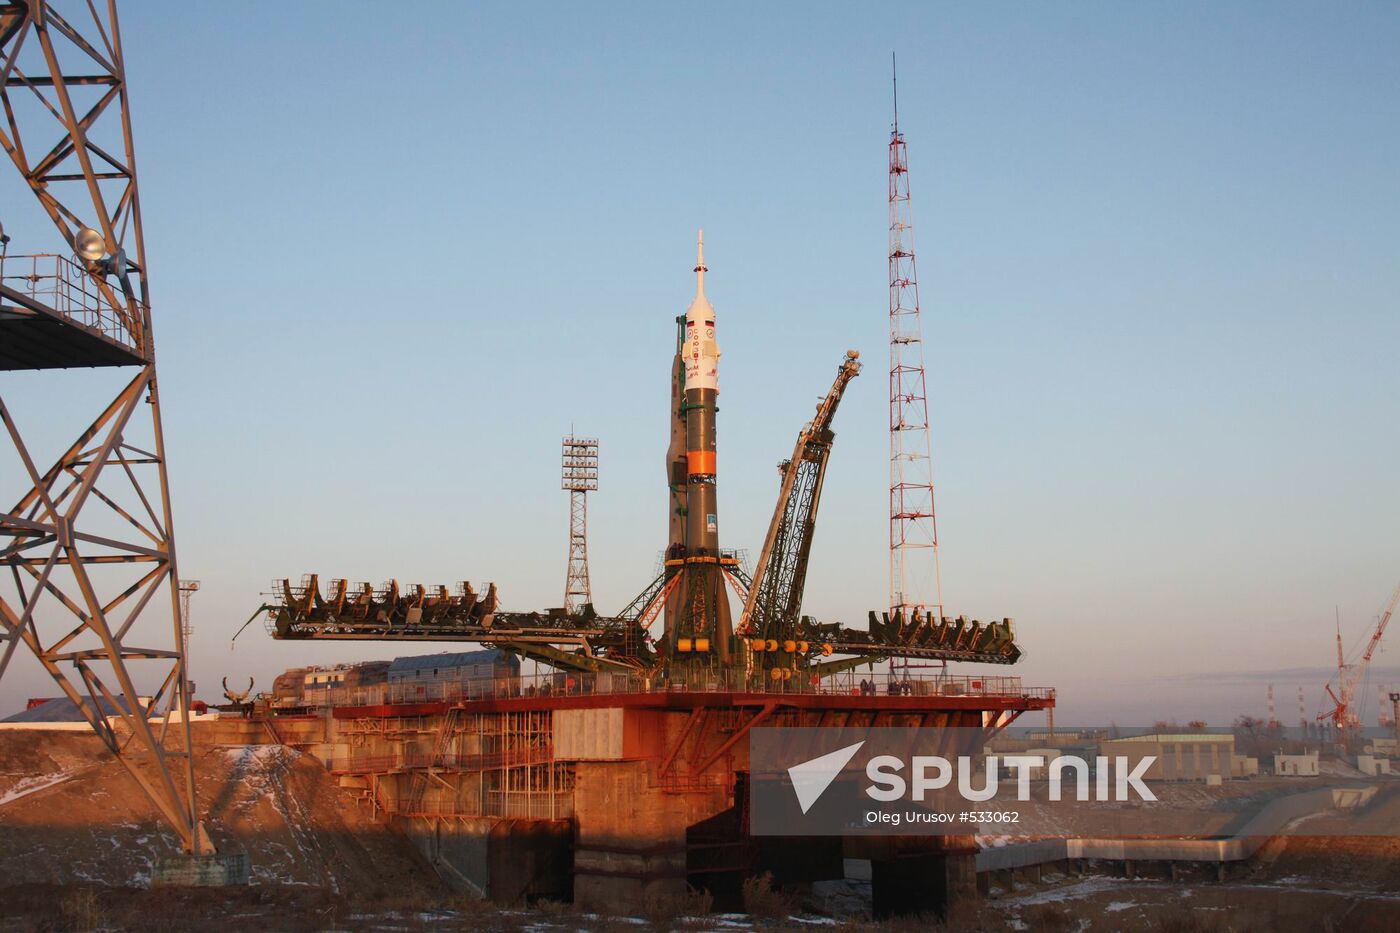 Soyuz TMA-17 spacecraft prepared for launch